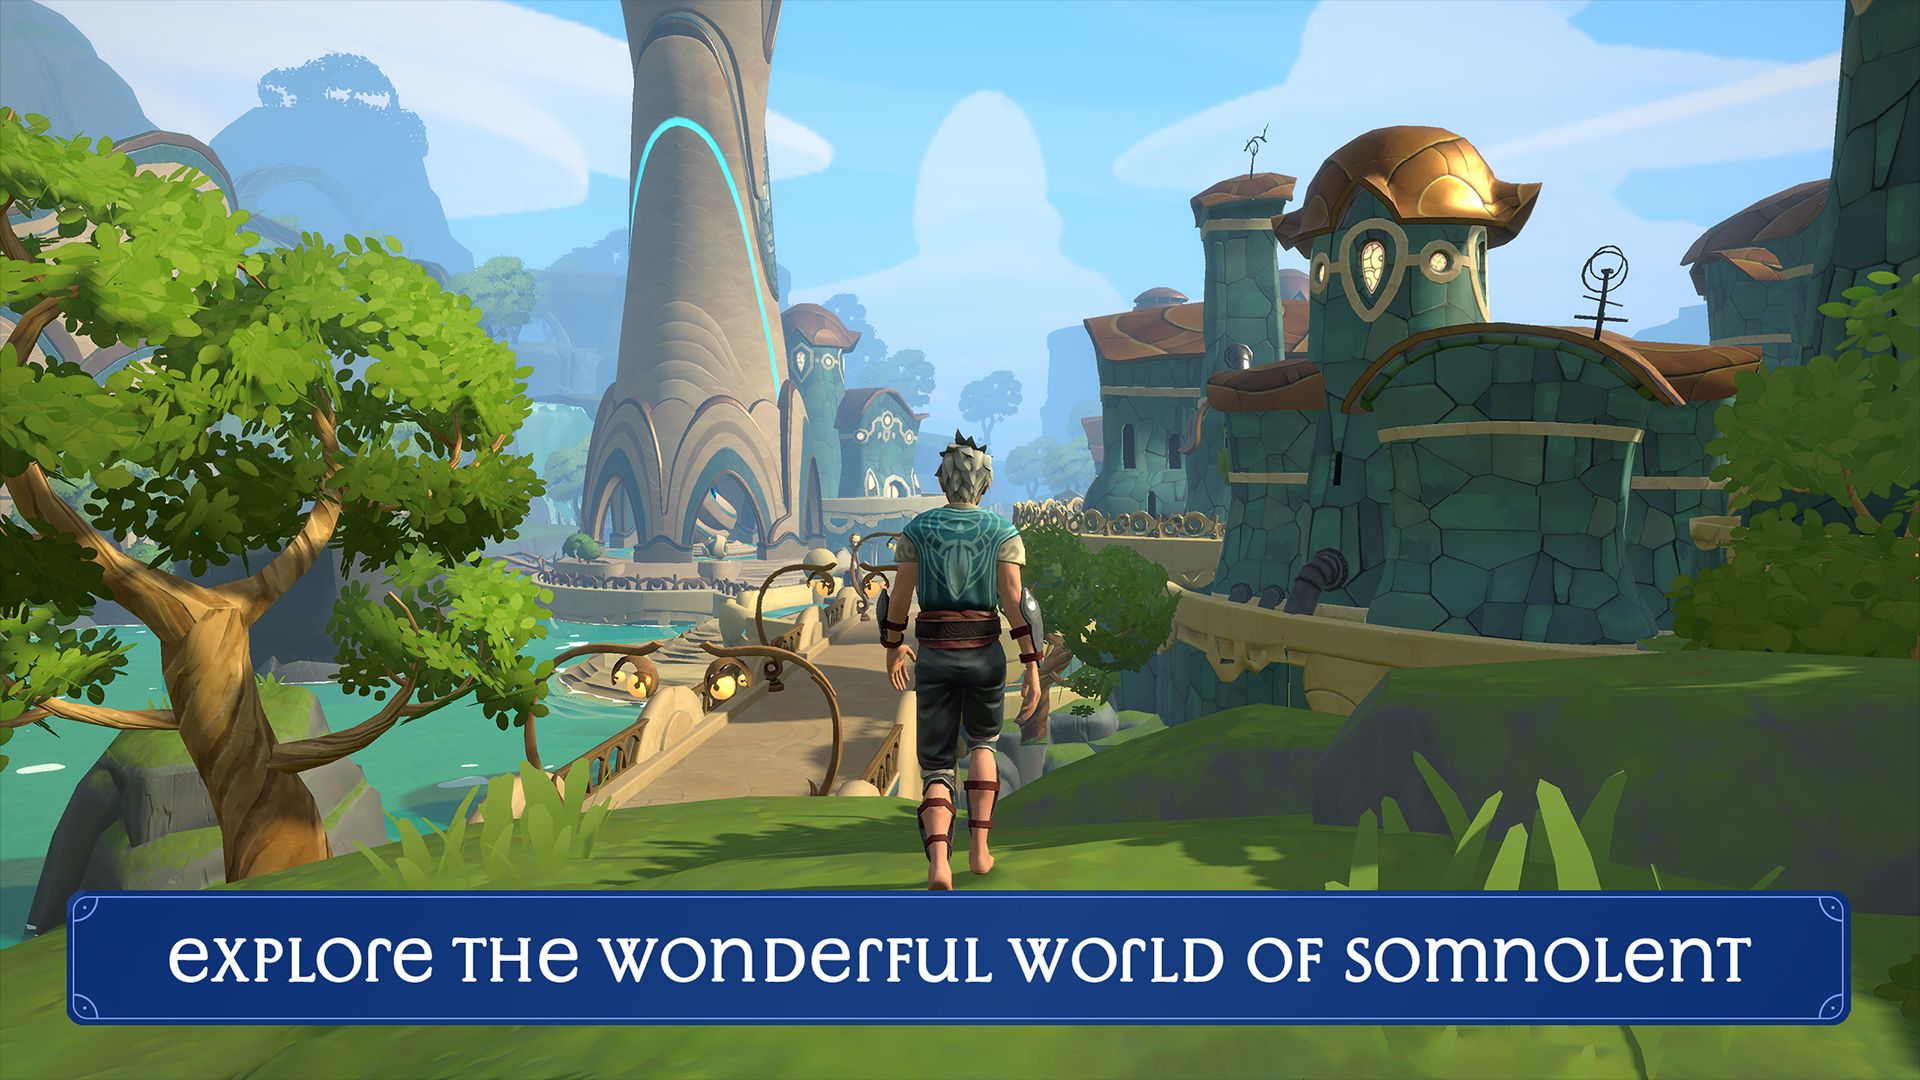 Somnolent: Action RPG Fantasy - Android game screenshots.